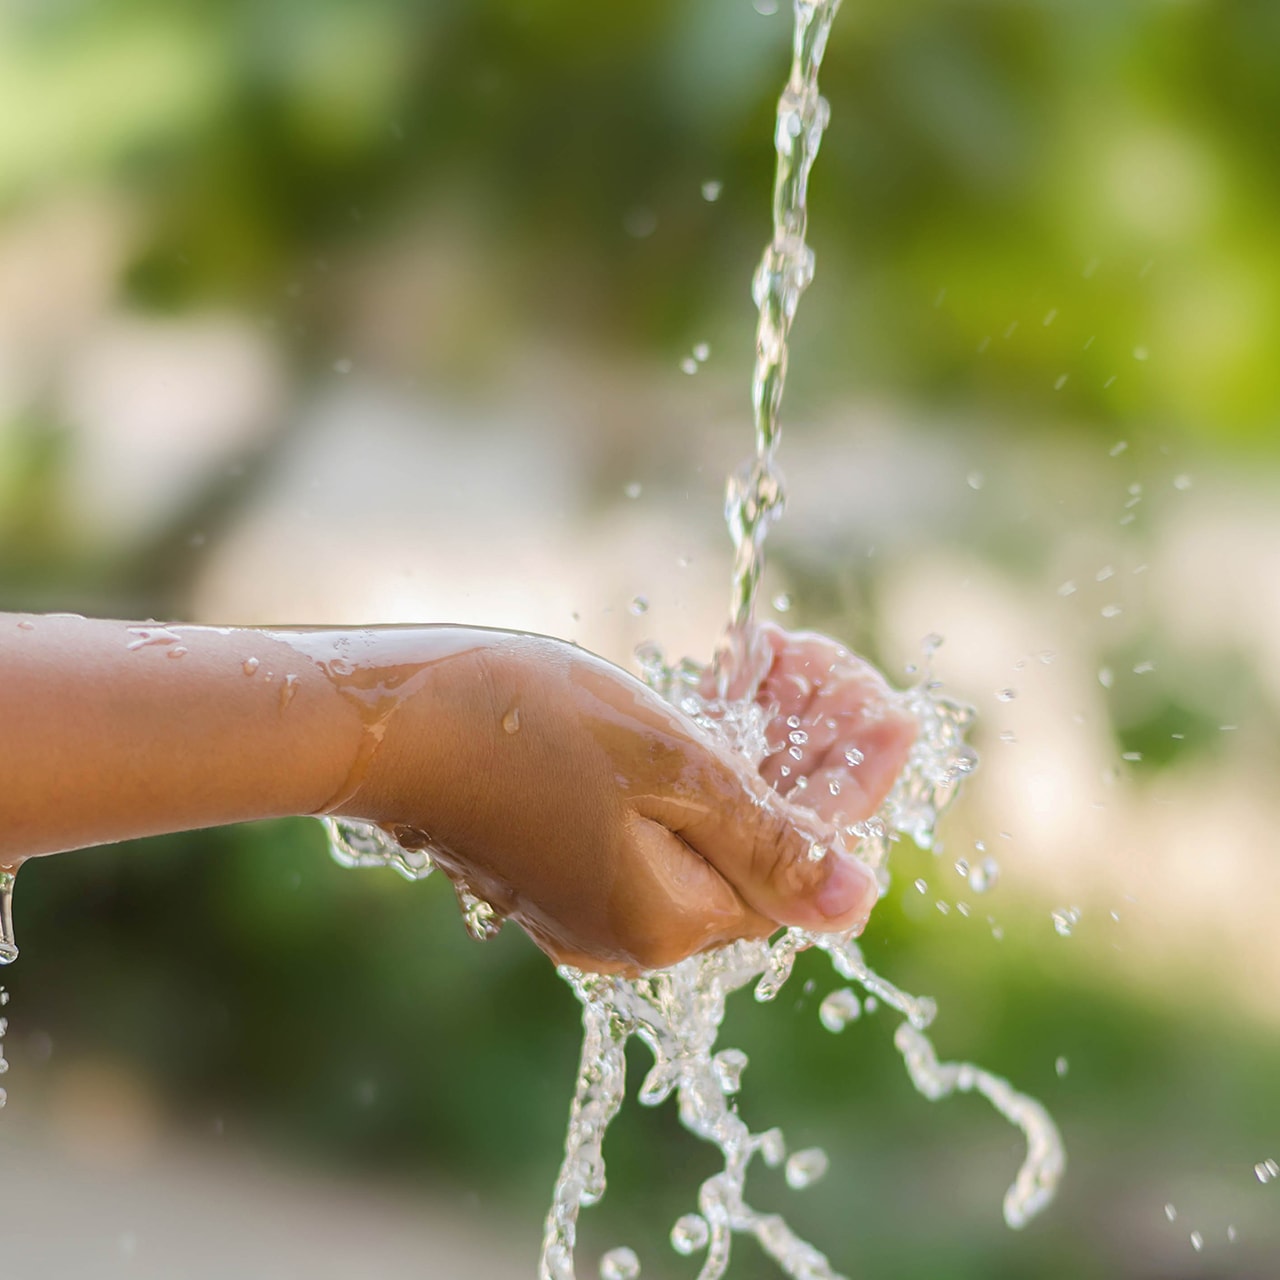 TRUlyPŨR Reduces Waterborne Pathogens